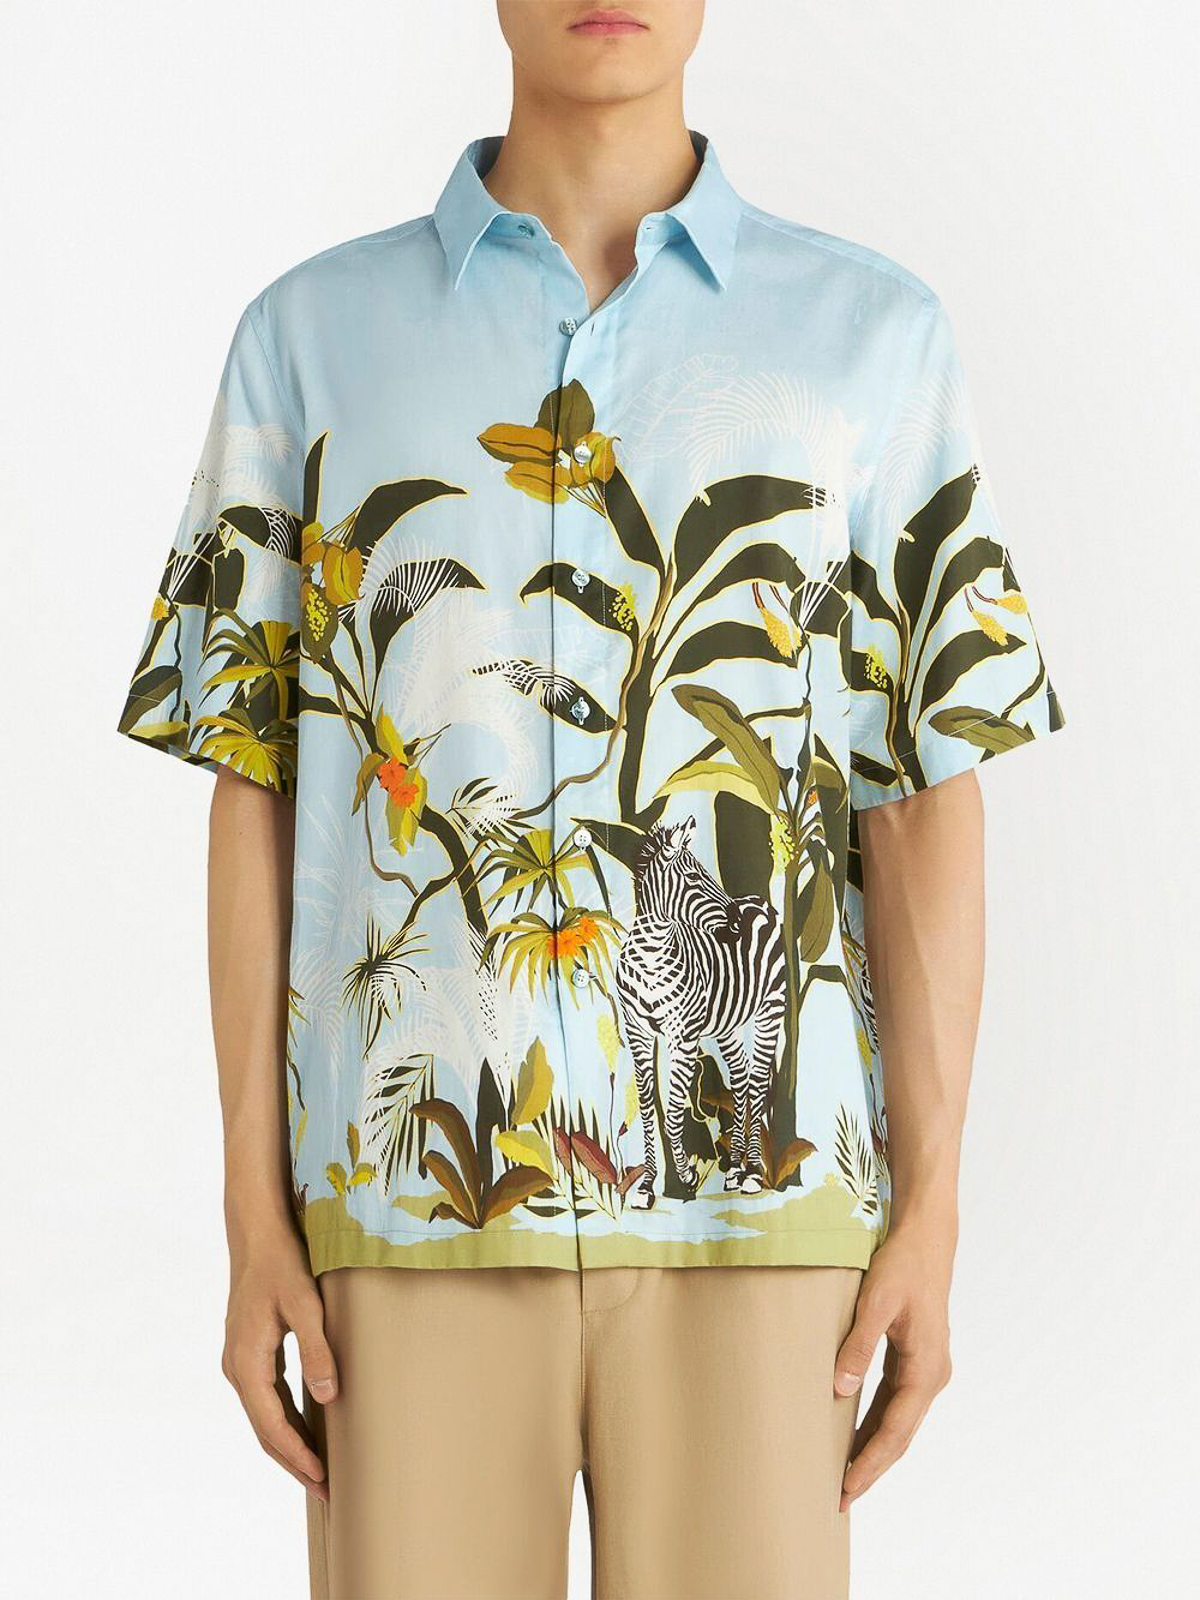 Shipley Alarmerend Praktisch Shirts Etro - Natur print shirt - 1K9164736025 | Shop online at iKRIX